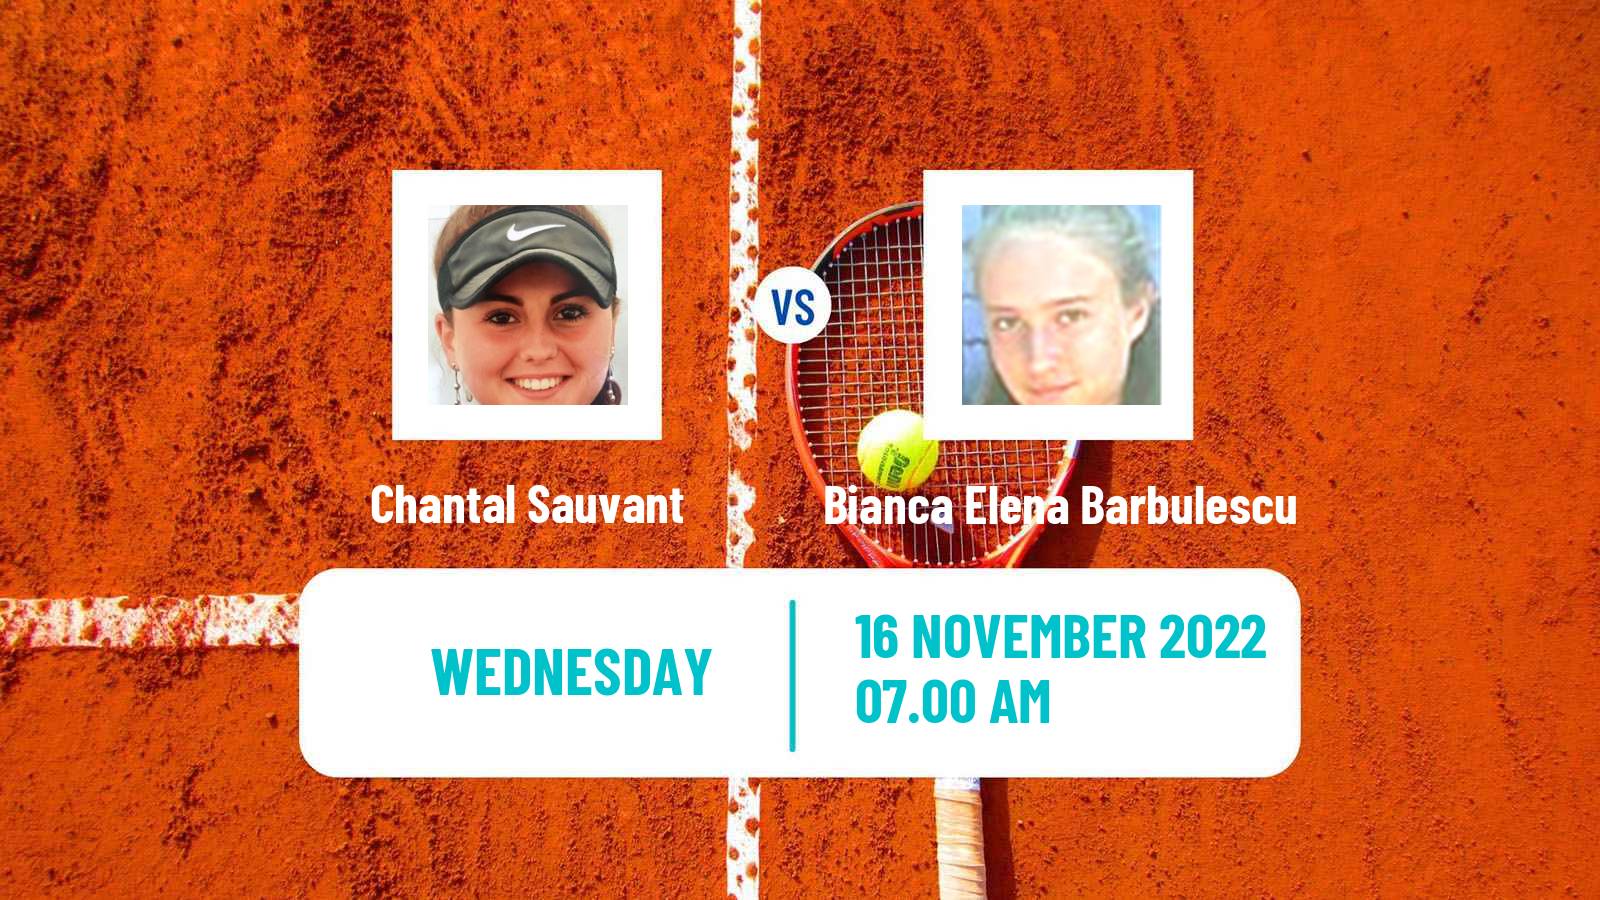 Tennis ITF Tournaments Chantal Sauvant - Bianca Elena Barbulescu